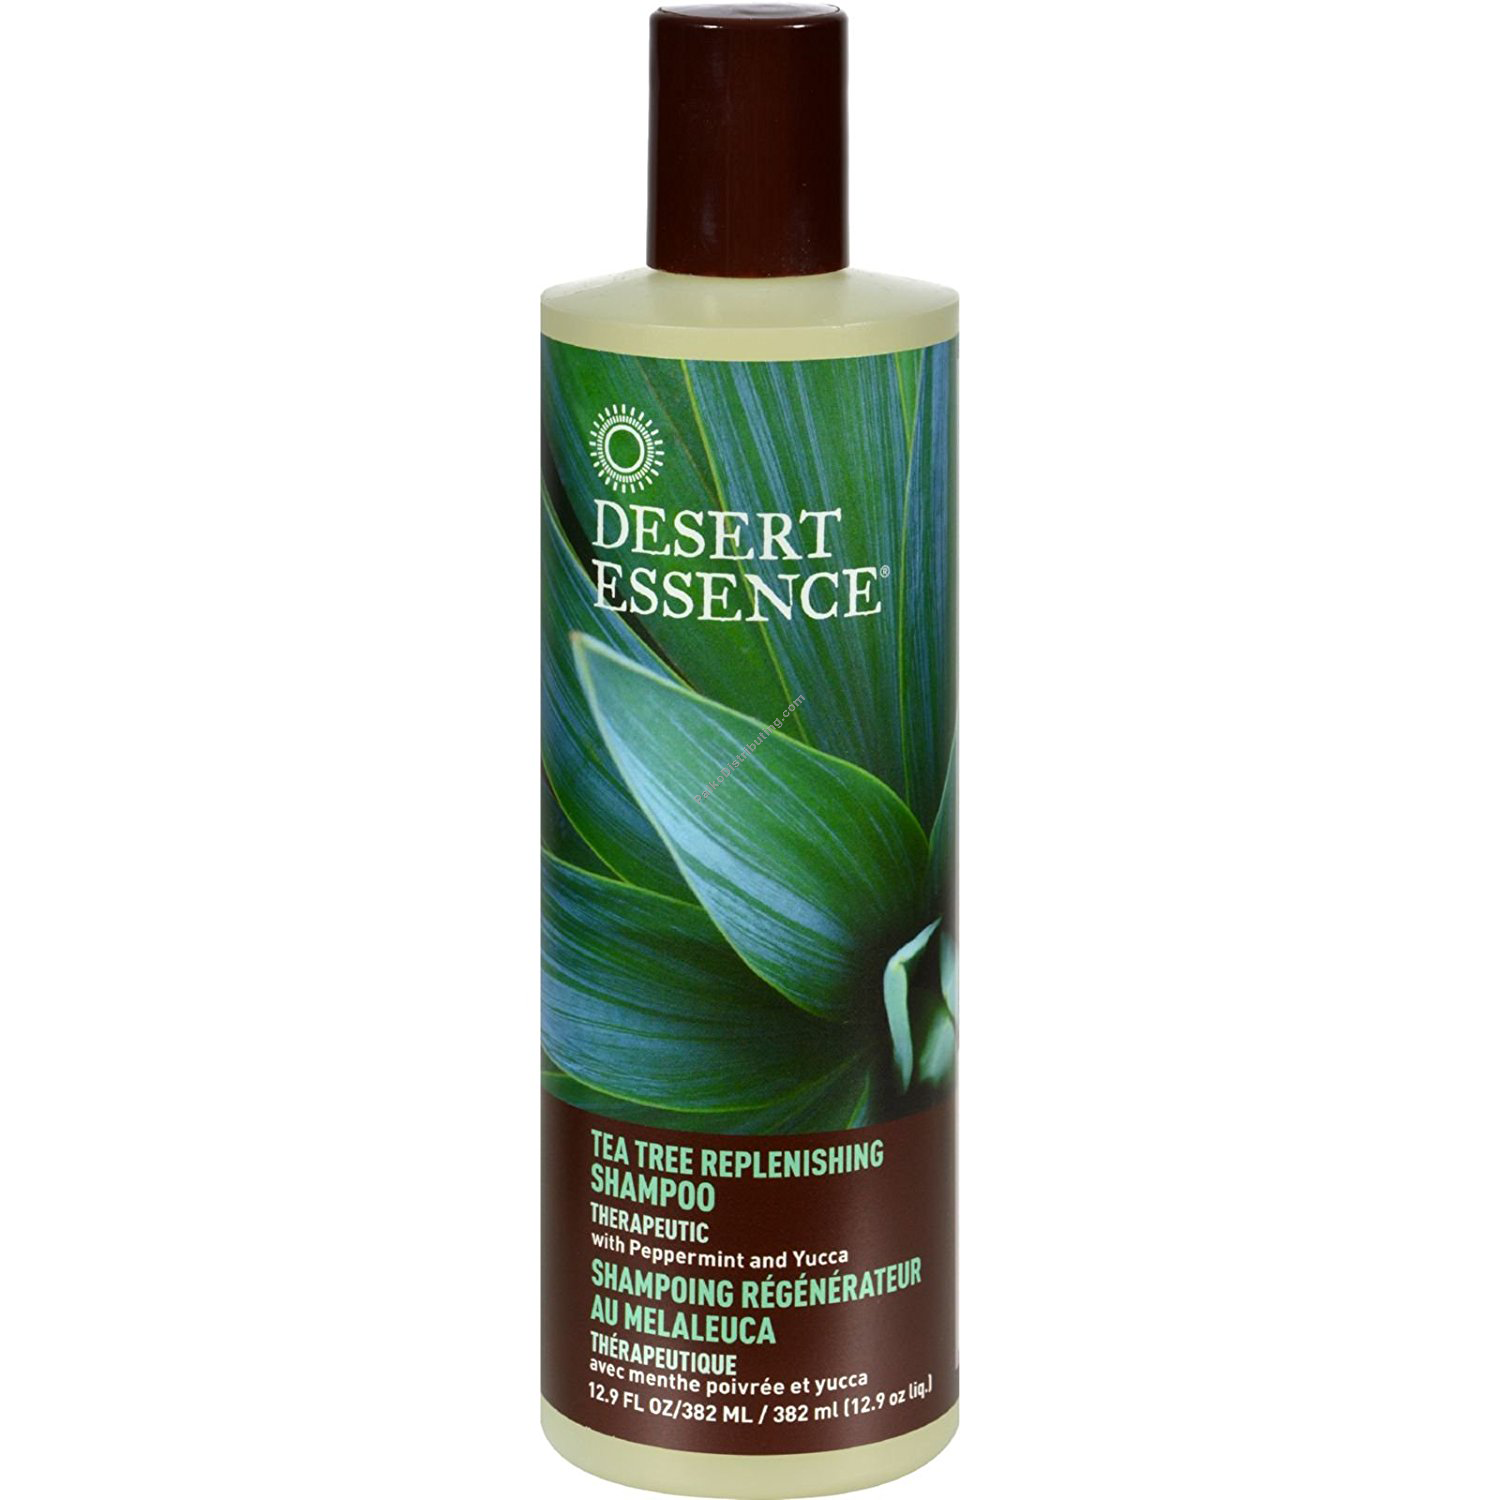 Product Image: Tea Tree Replenishing Shampoo